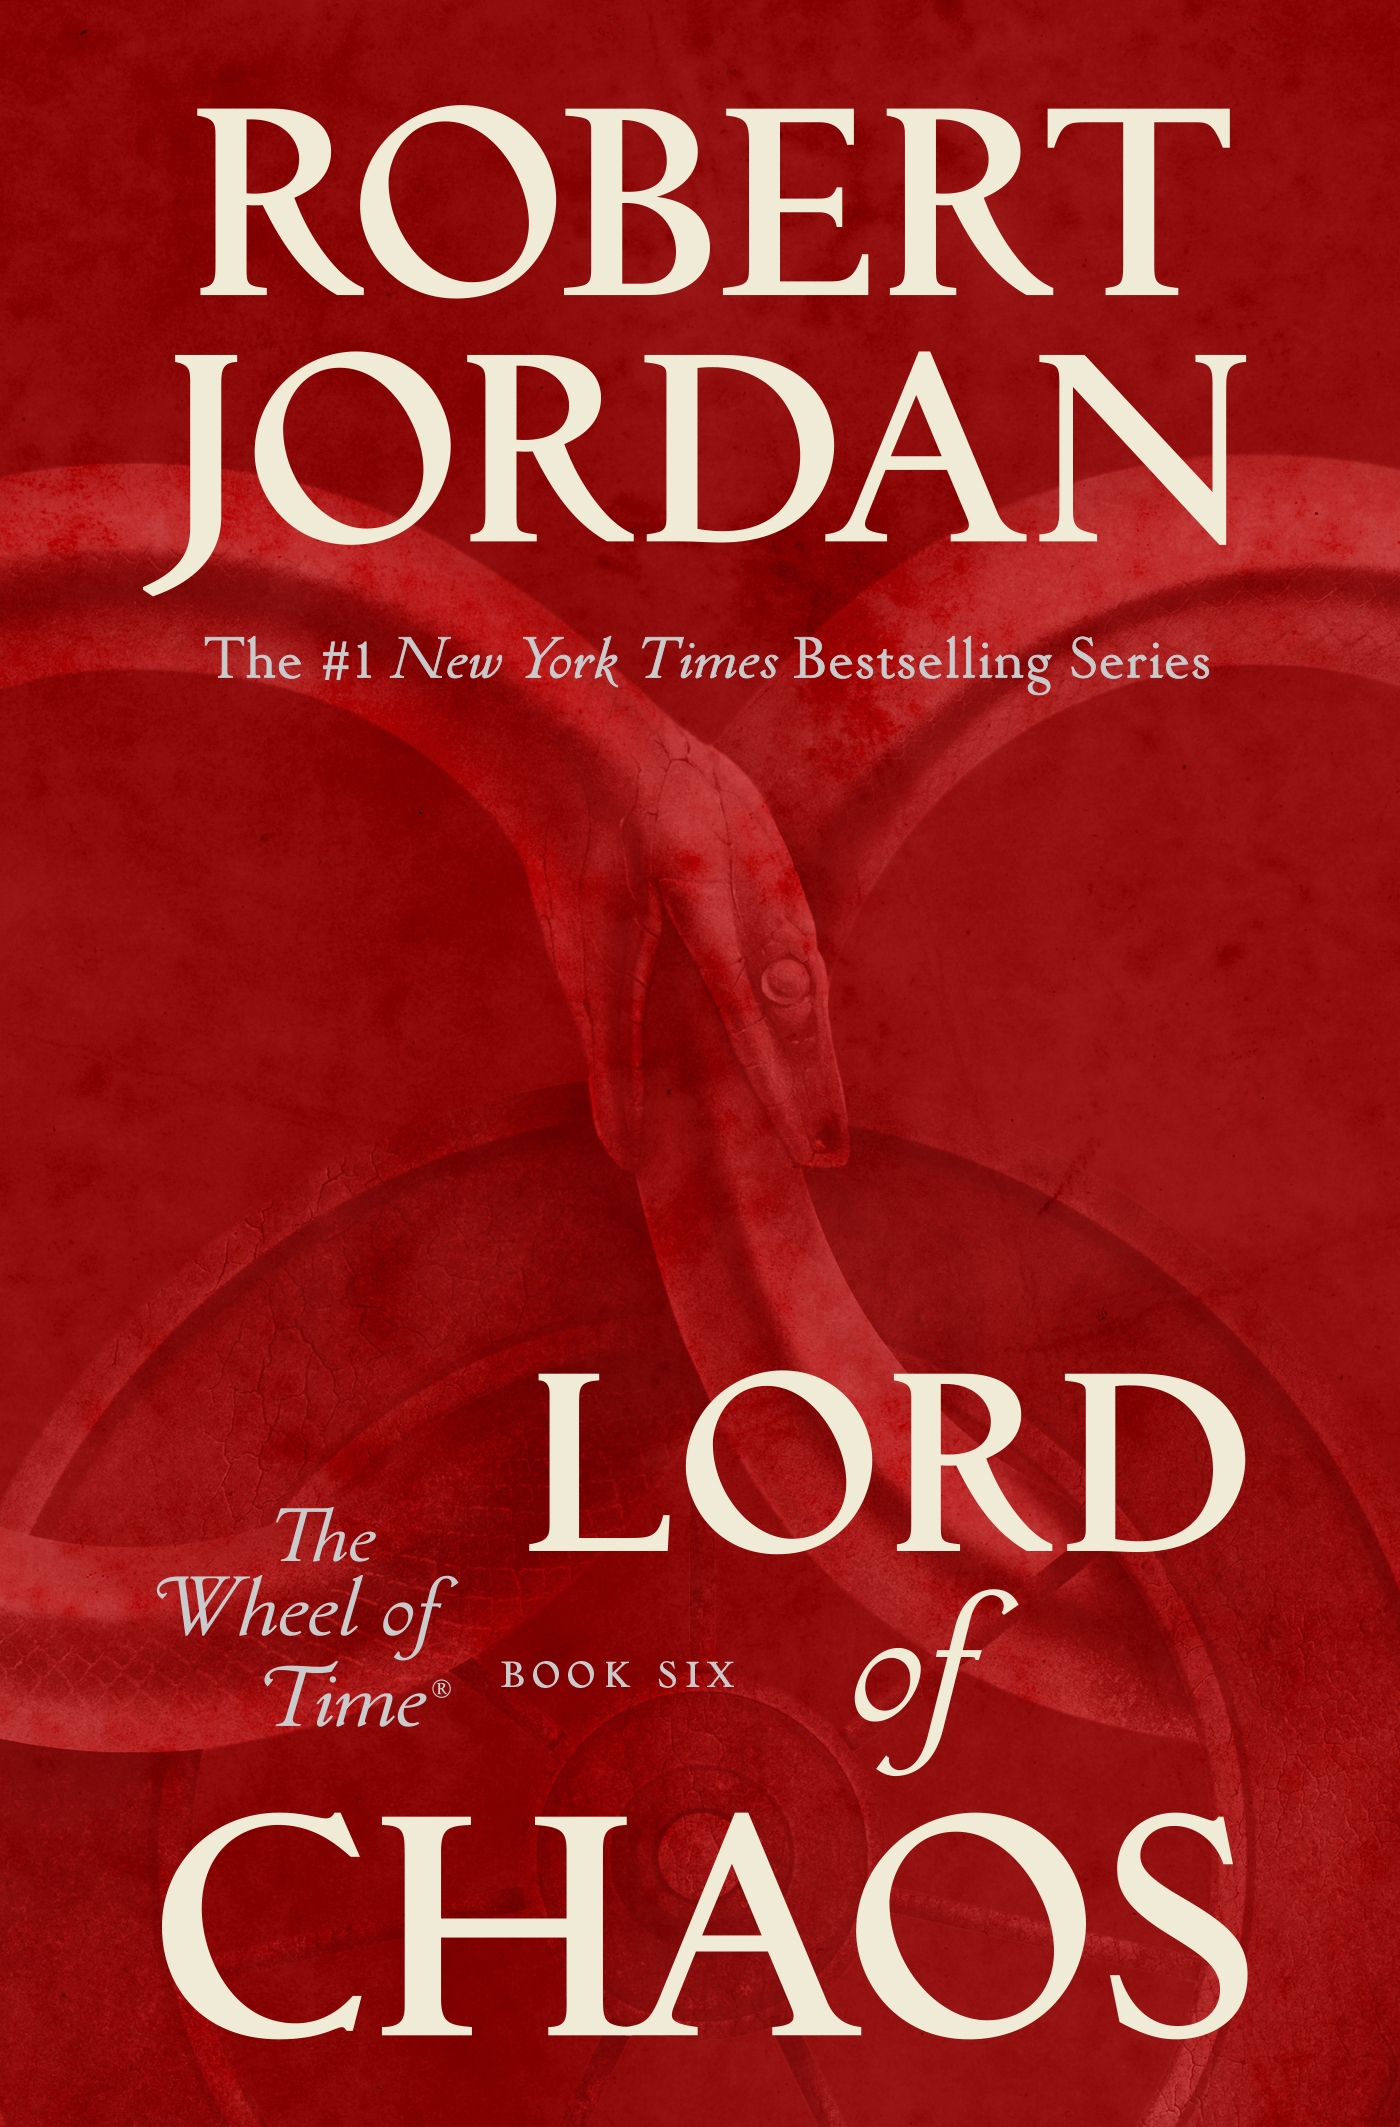 Book “Lord of Chaos” by Robert Jordan — December 31, 2019